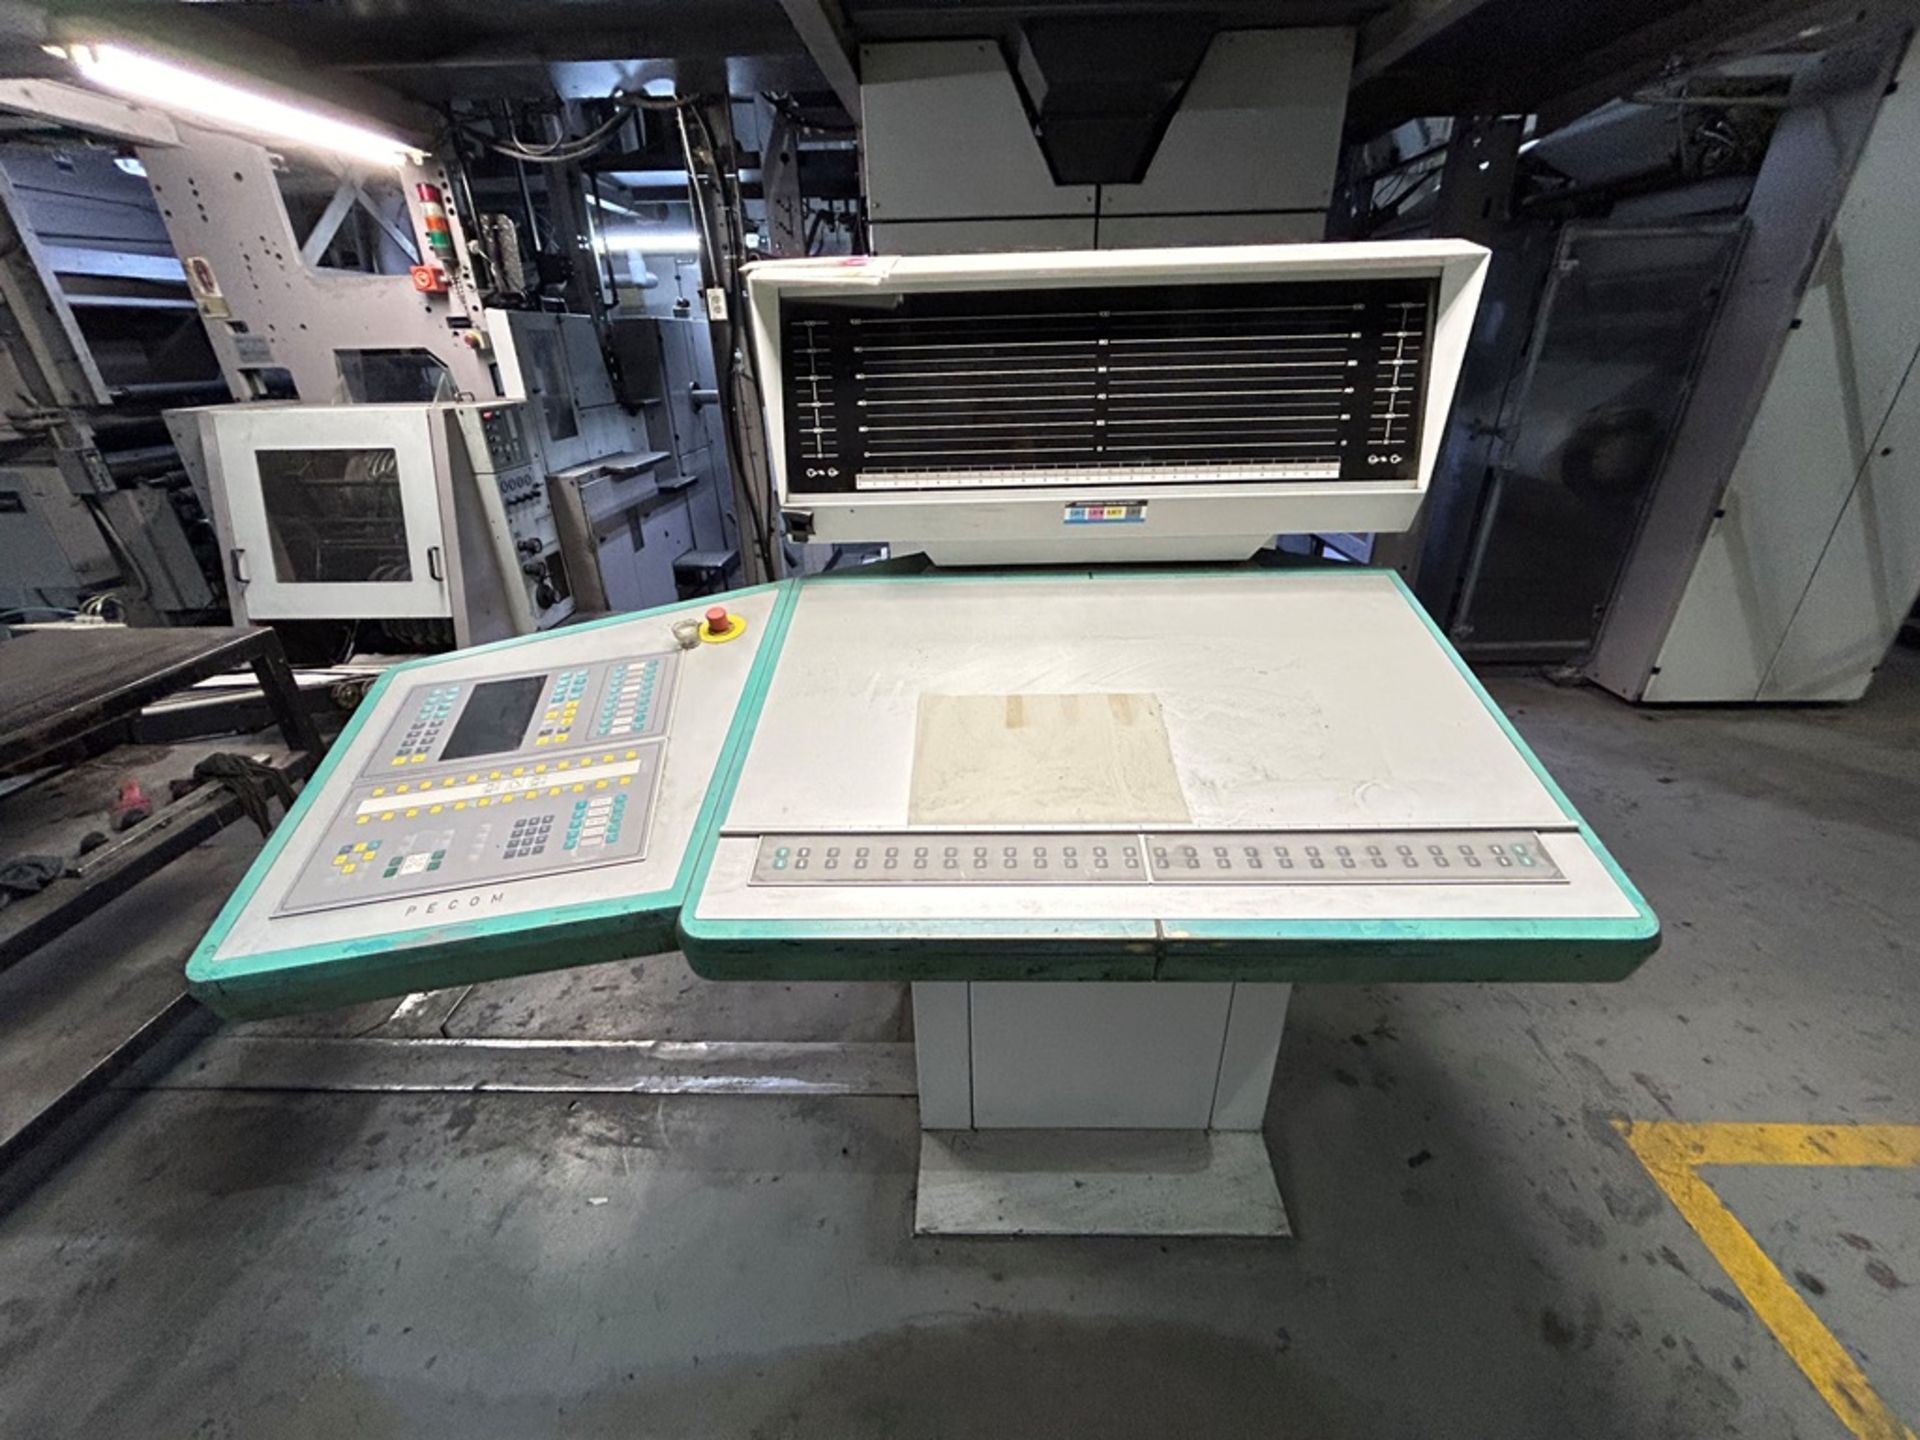 MAN ROLAND rotary printing machine, Model UNISET 60, Serial No. 11191, Year 2000, 400V, consisting - Image 28 of 37